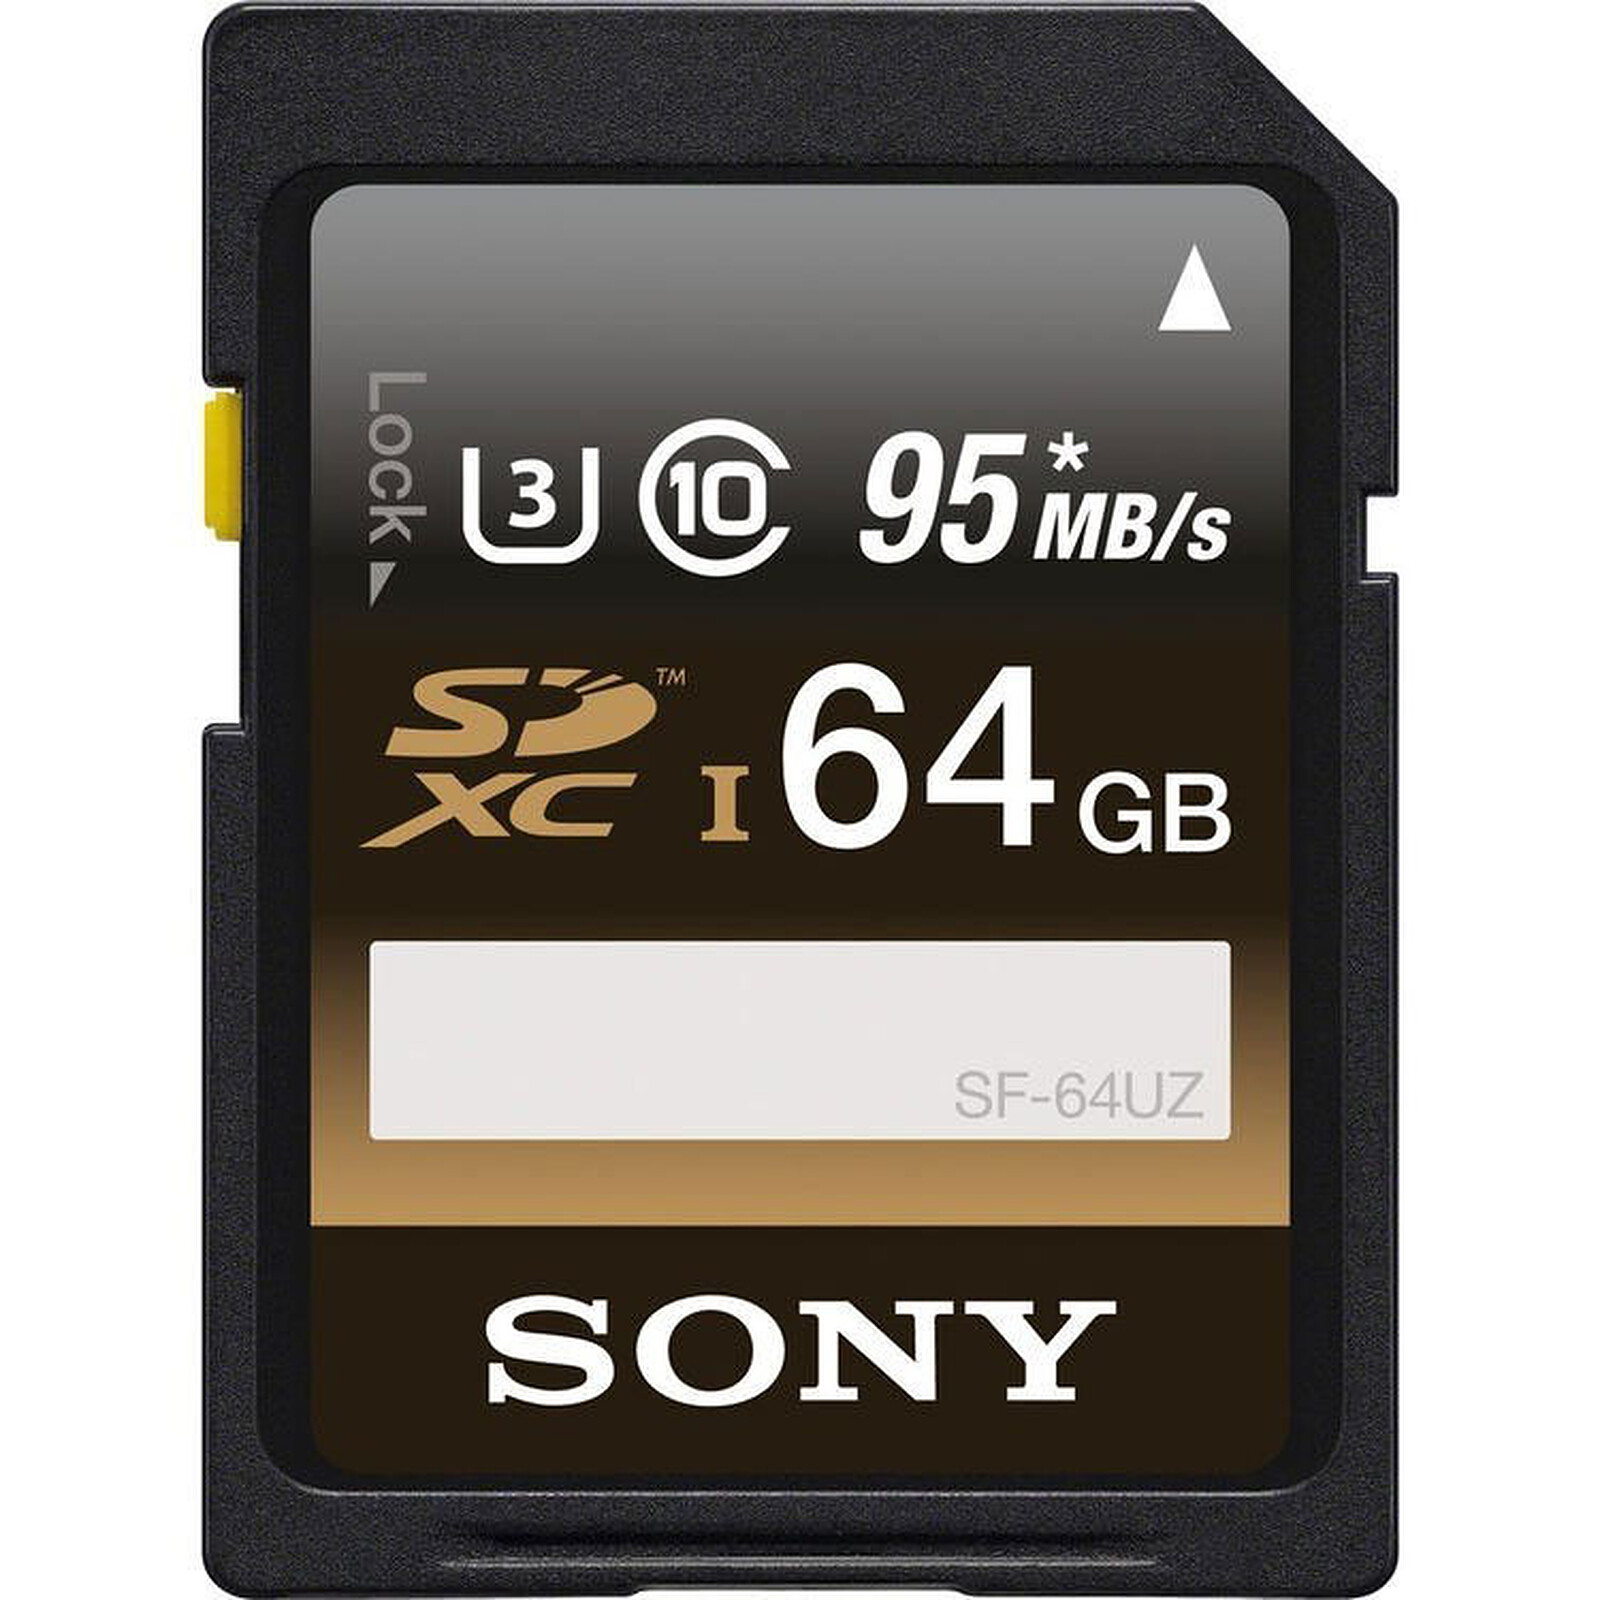 SanDisk Extreme Pro SDHC UHS-I 128 Go (SDSDXXD-128G-GN4IN) - Carte mémoire  - LDLC